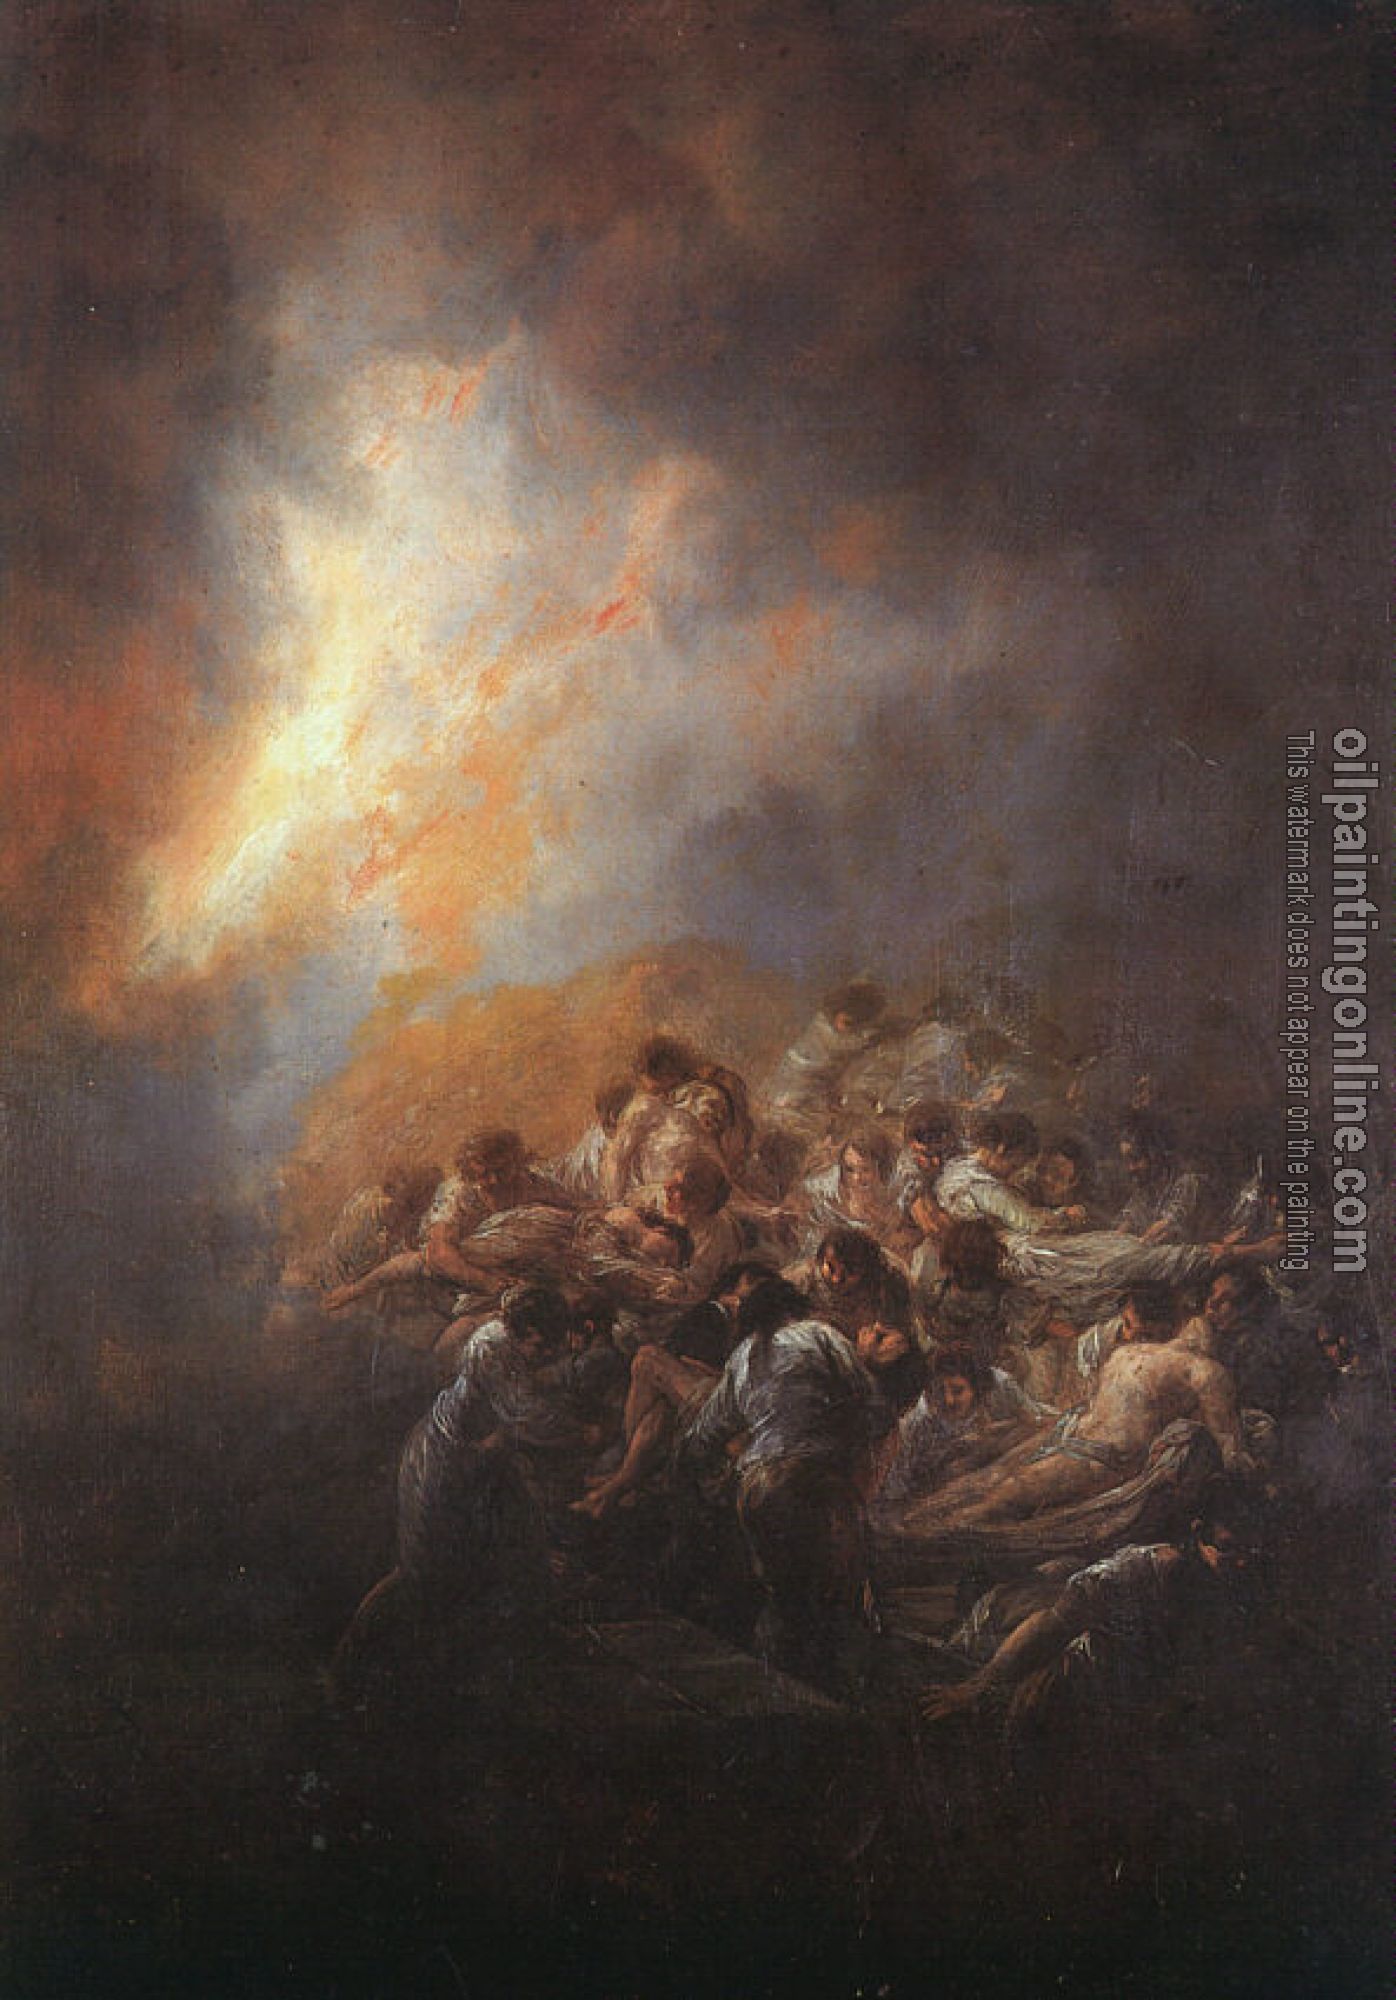 Goya, Francisco de - The Fire